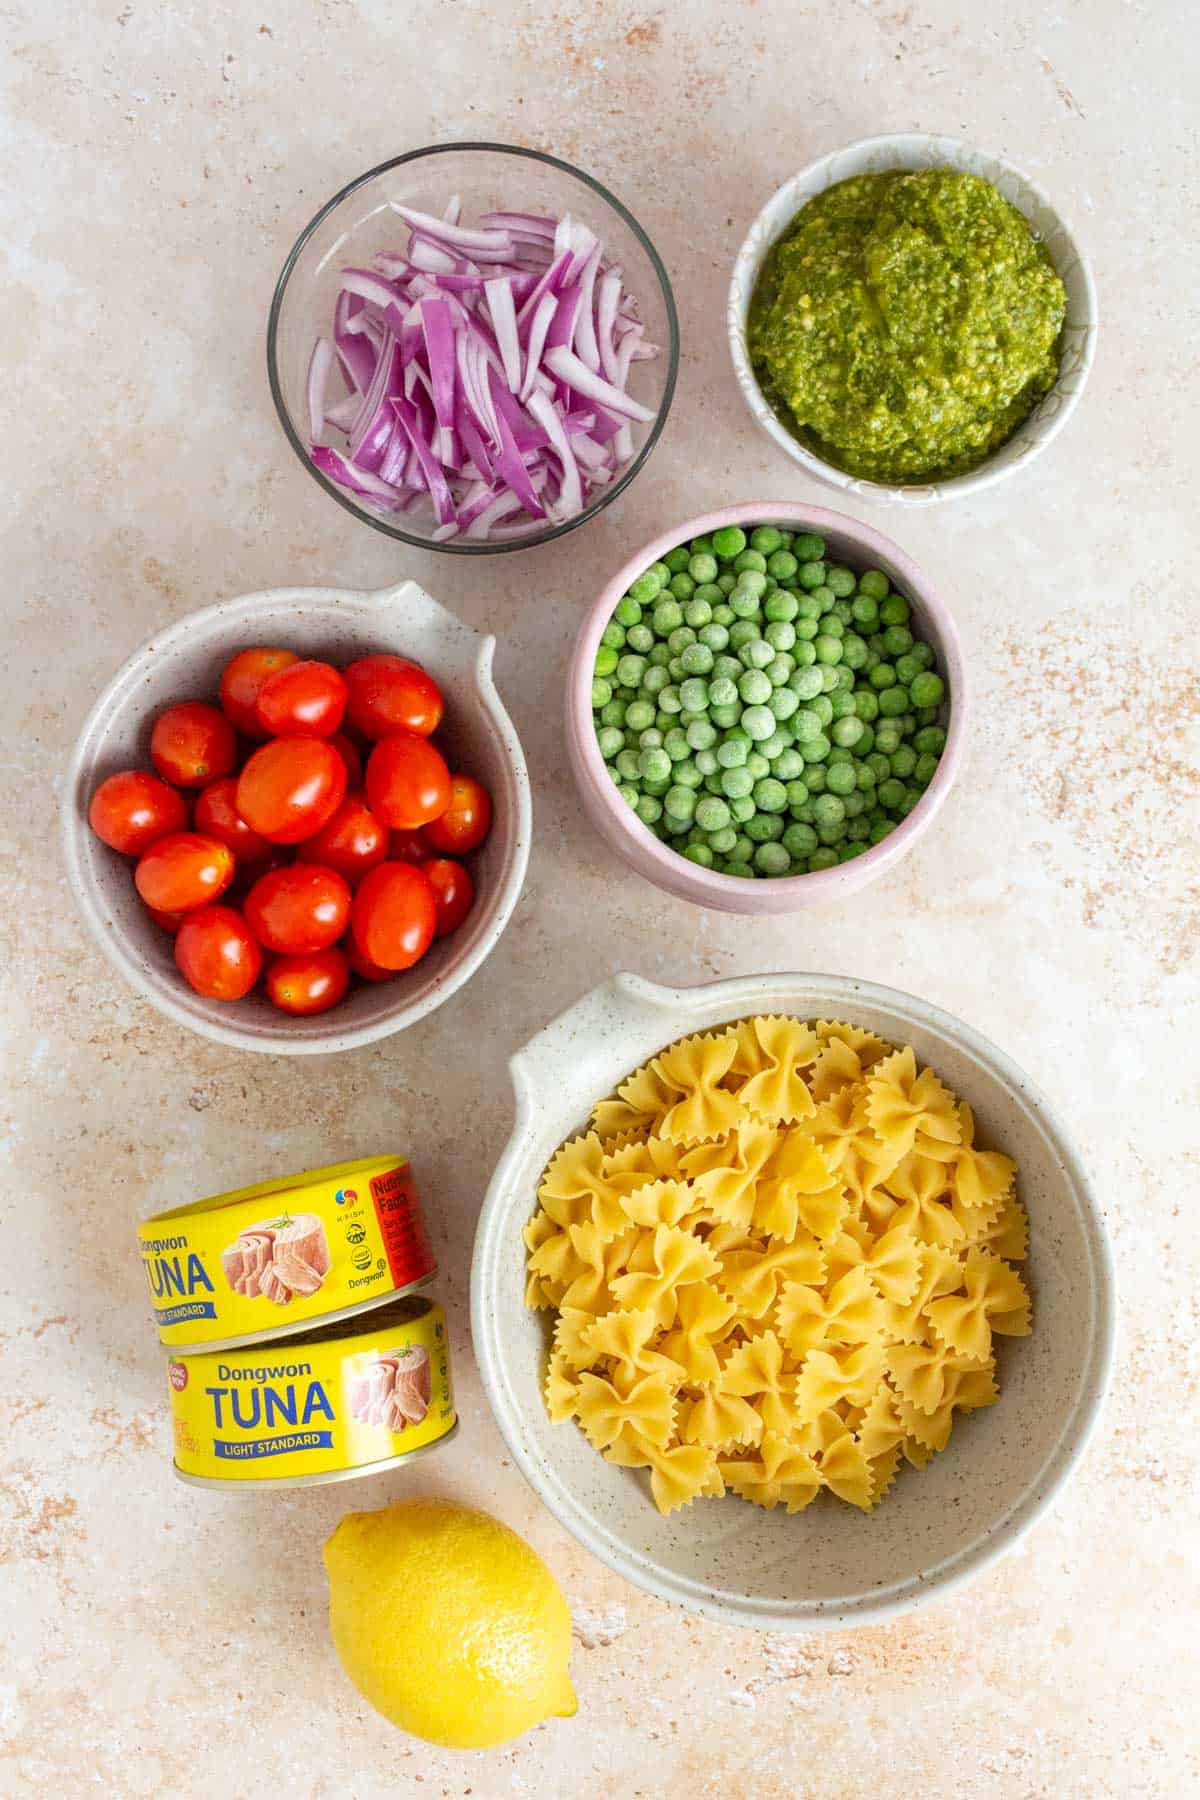 Ingredients needed to make tuna pesto pasta.